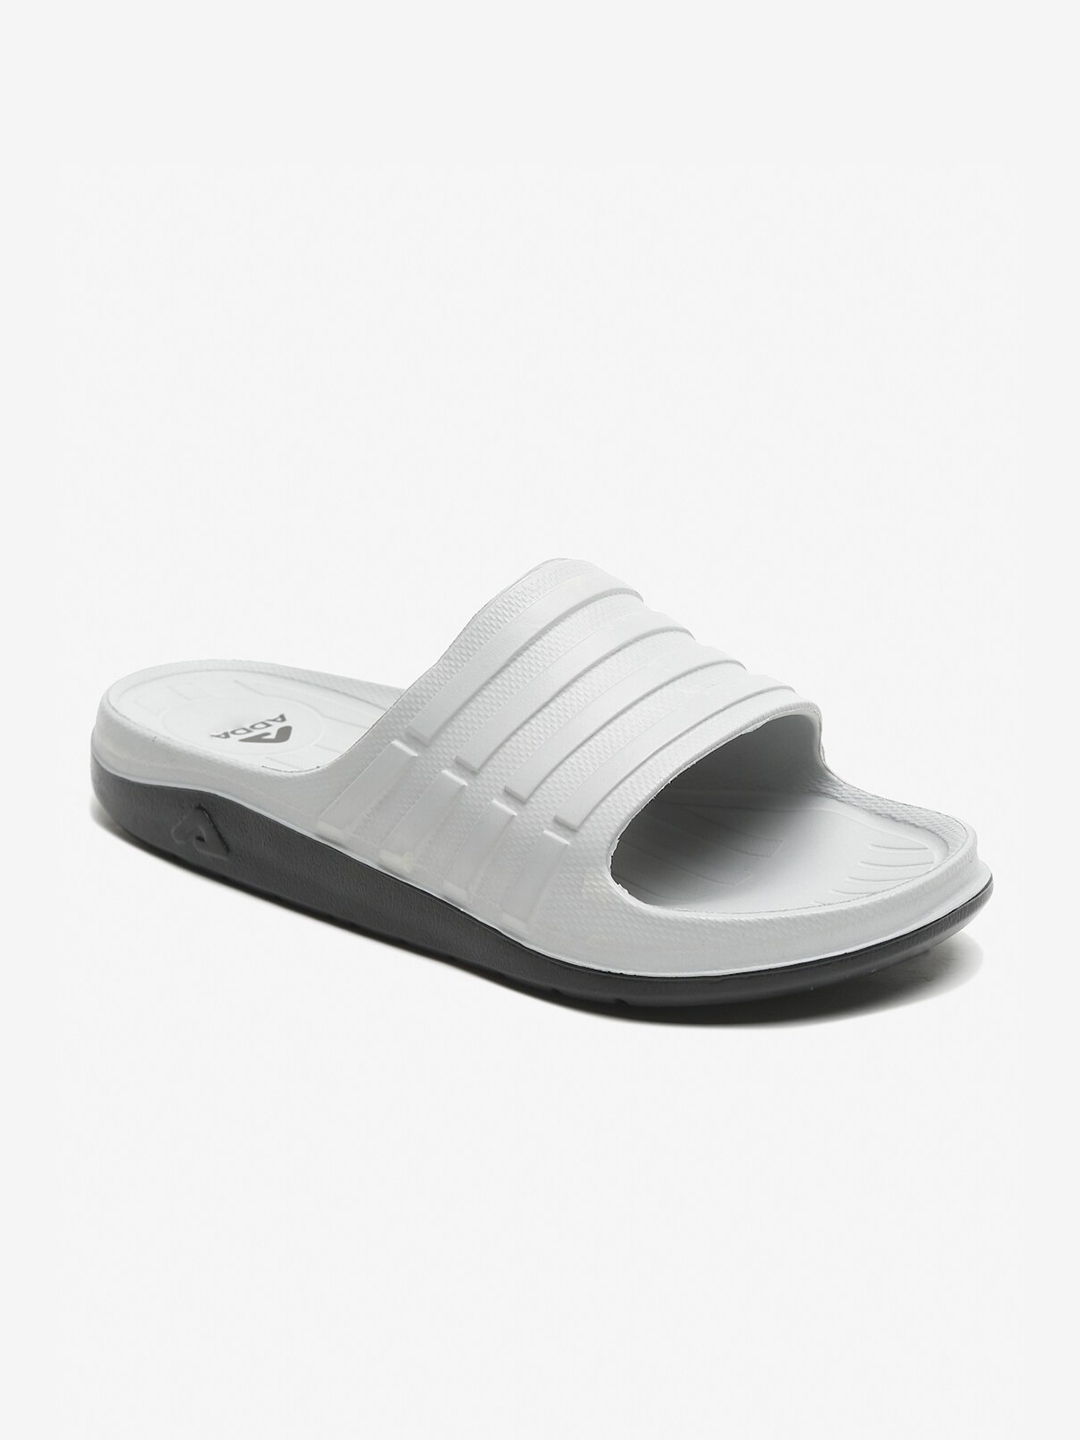 Buy Adda Men Grey Rubber Sliders - Flip Flops for Men 16570746 | Myntra